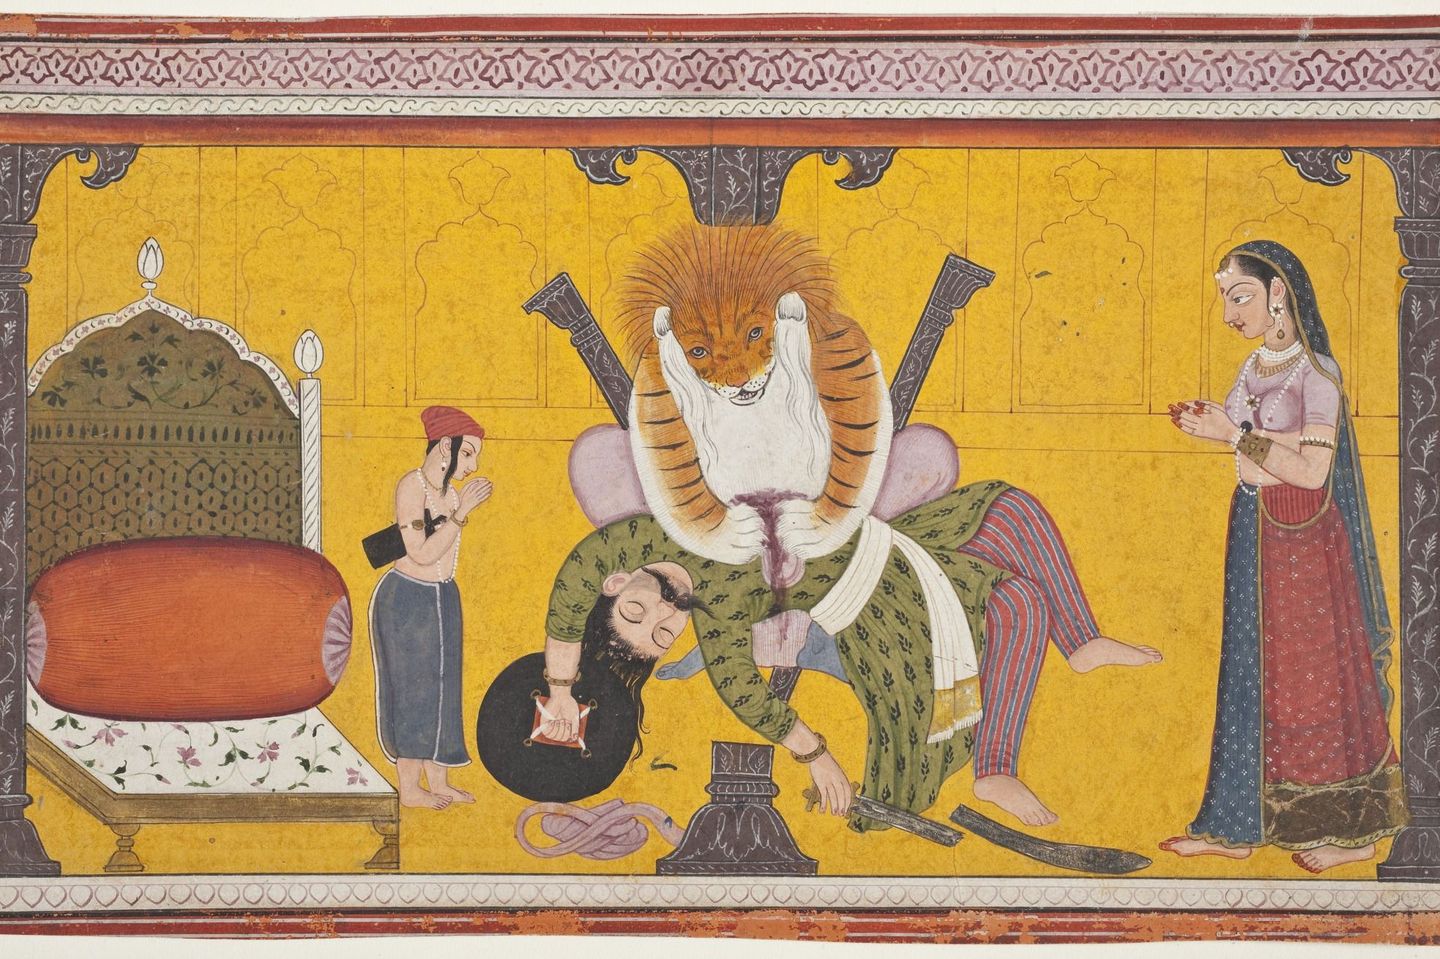 Narasinha tötet Hiranyakashipu - Aus einer Bhagavata Purana (1760-1770)